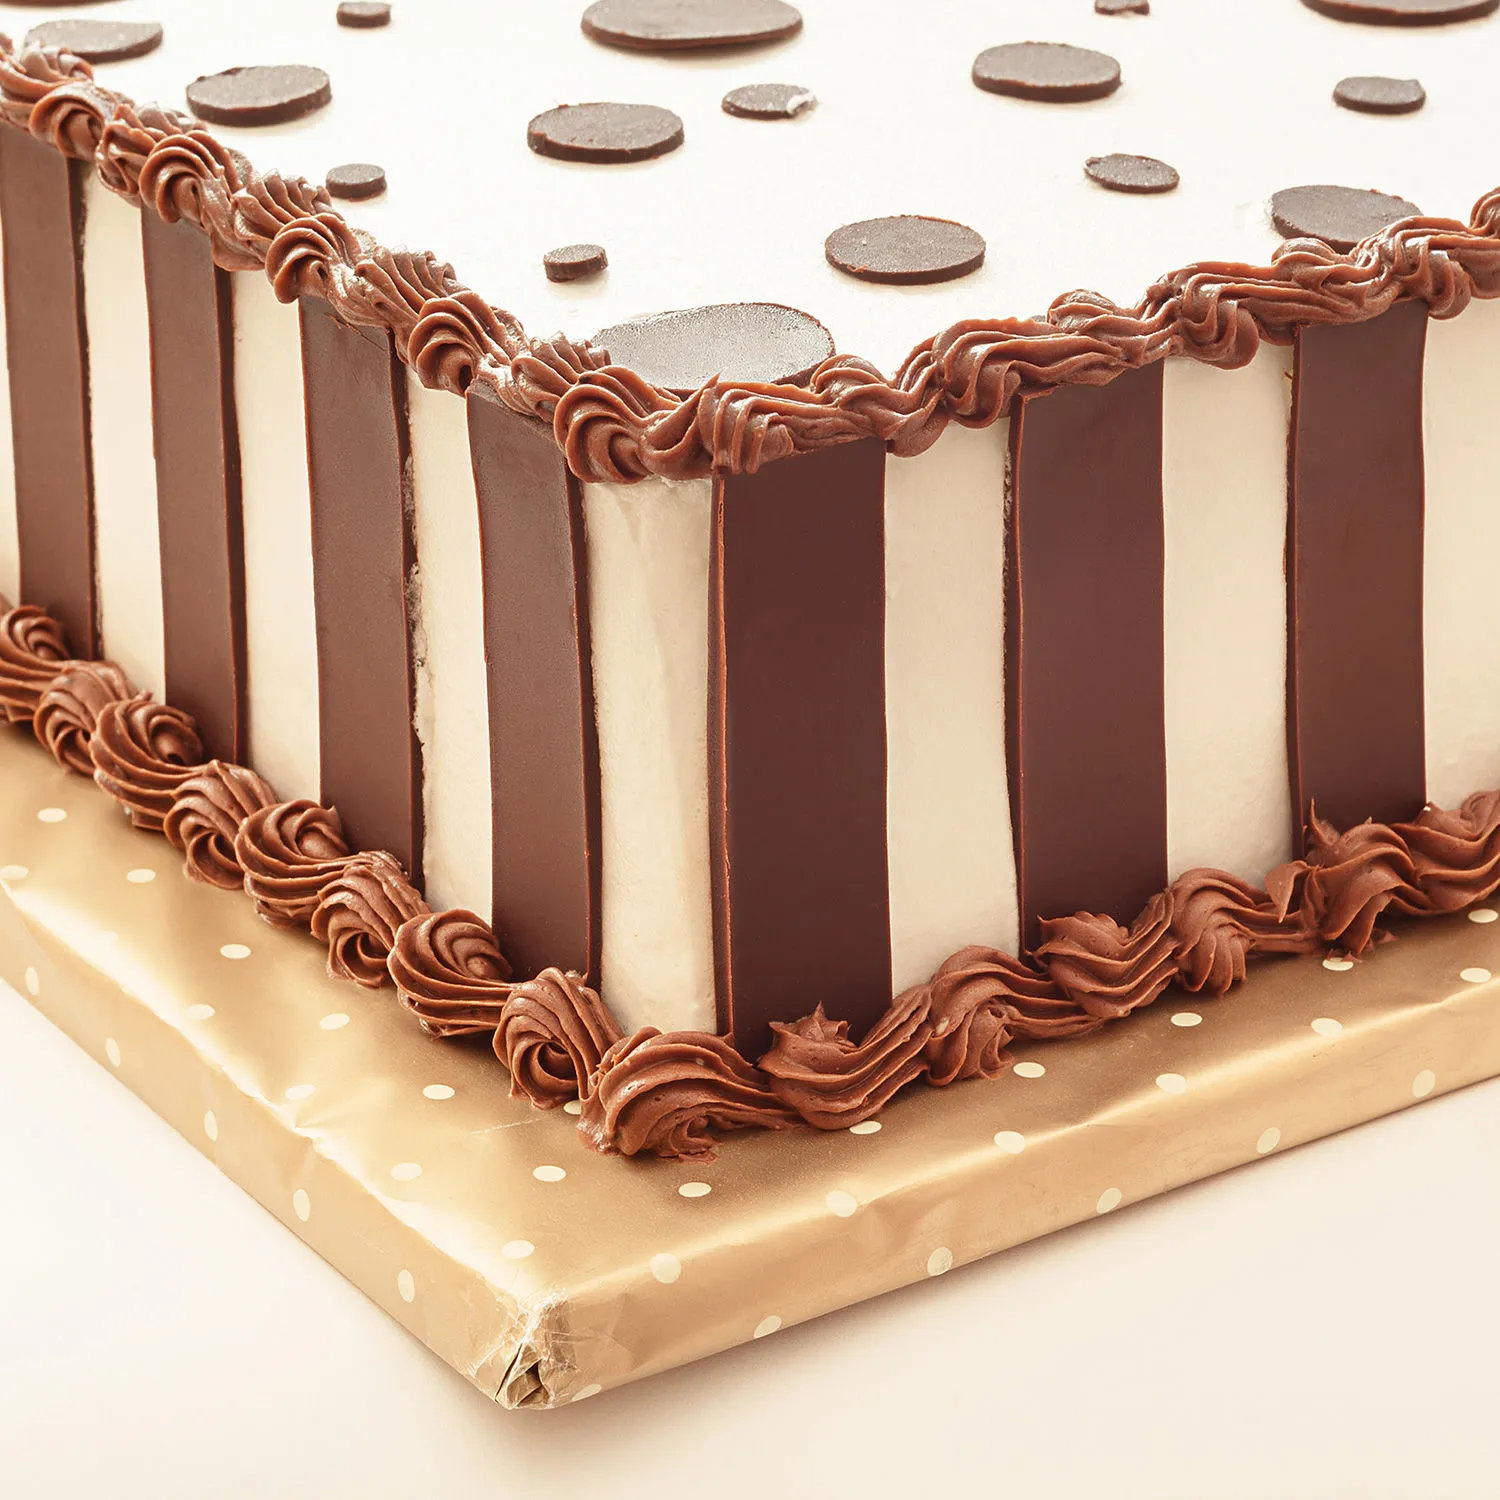 Chocolate Gift Cake - 1 KG